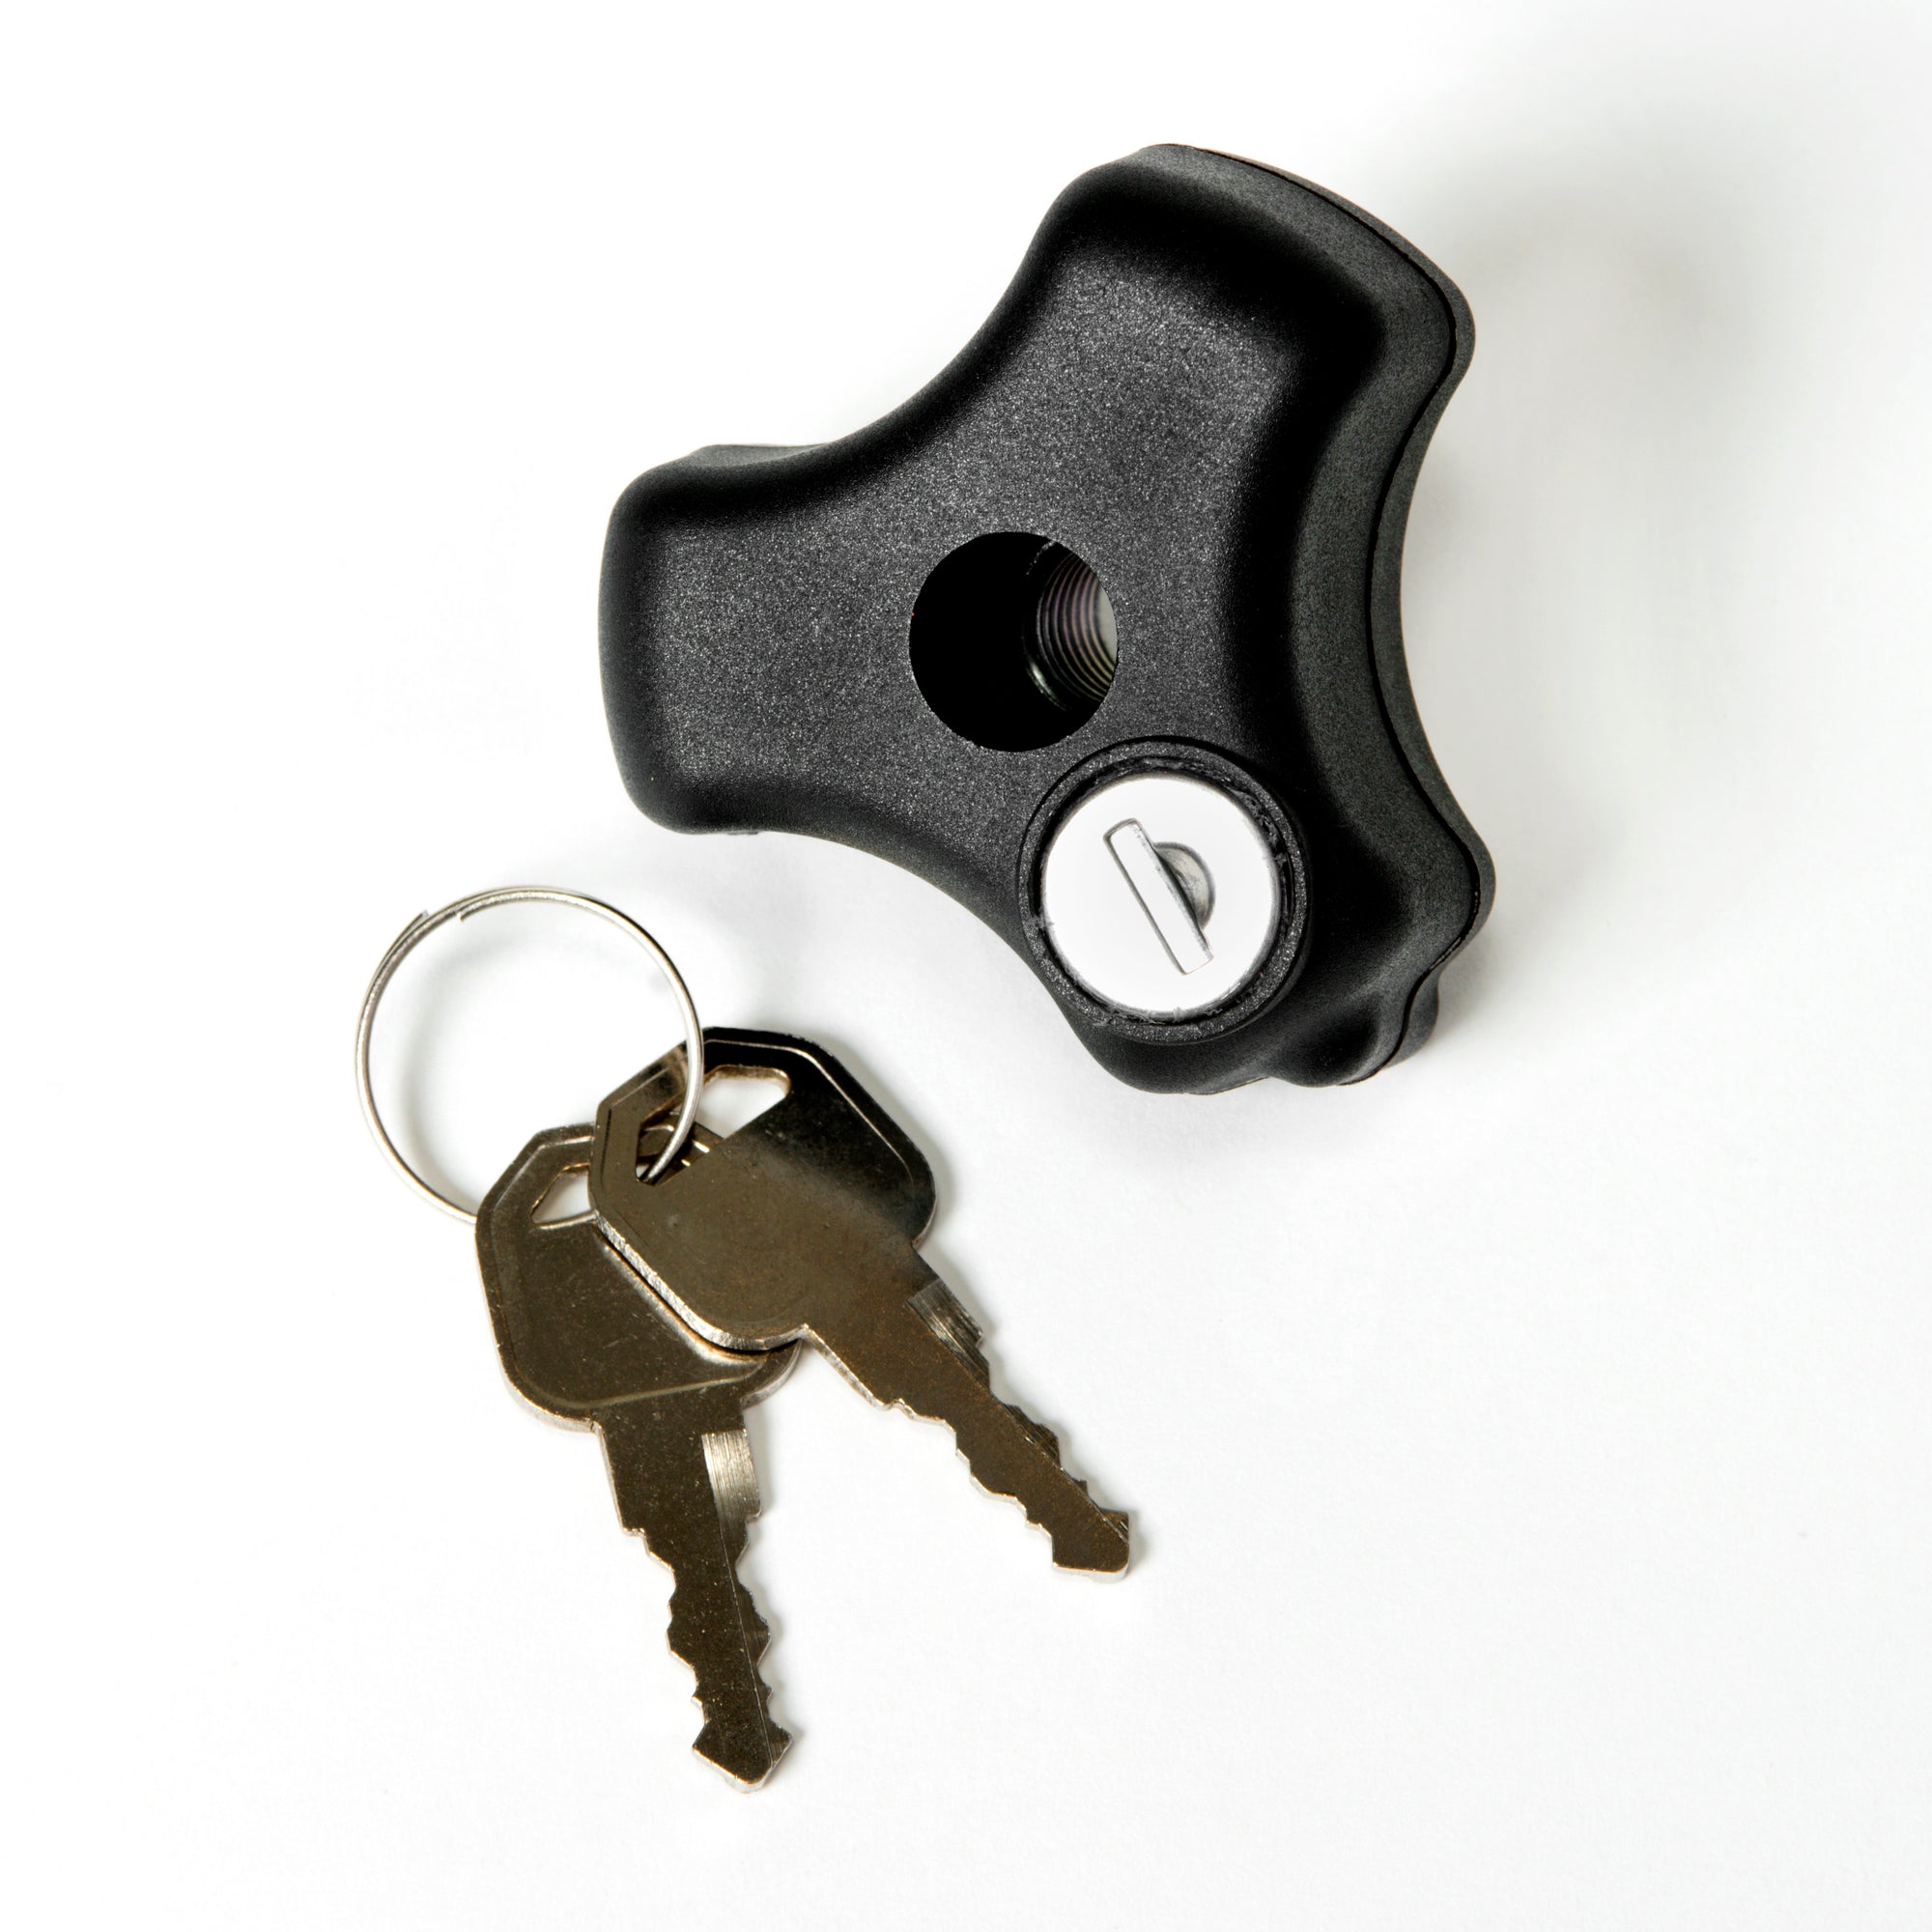 Versatile Locking Knob to secure your jack (VERS-LK)